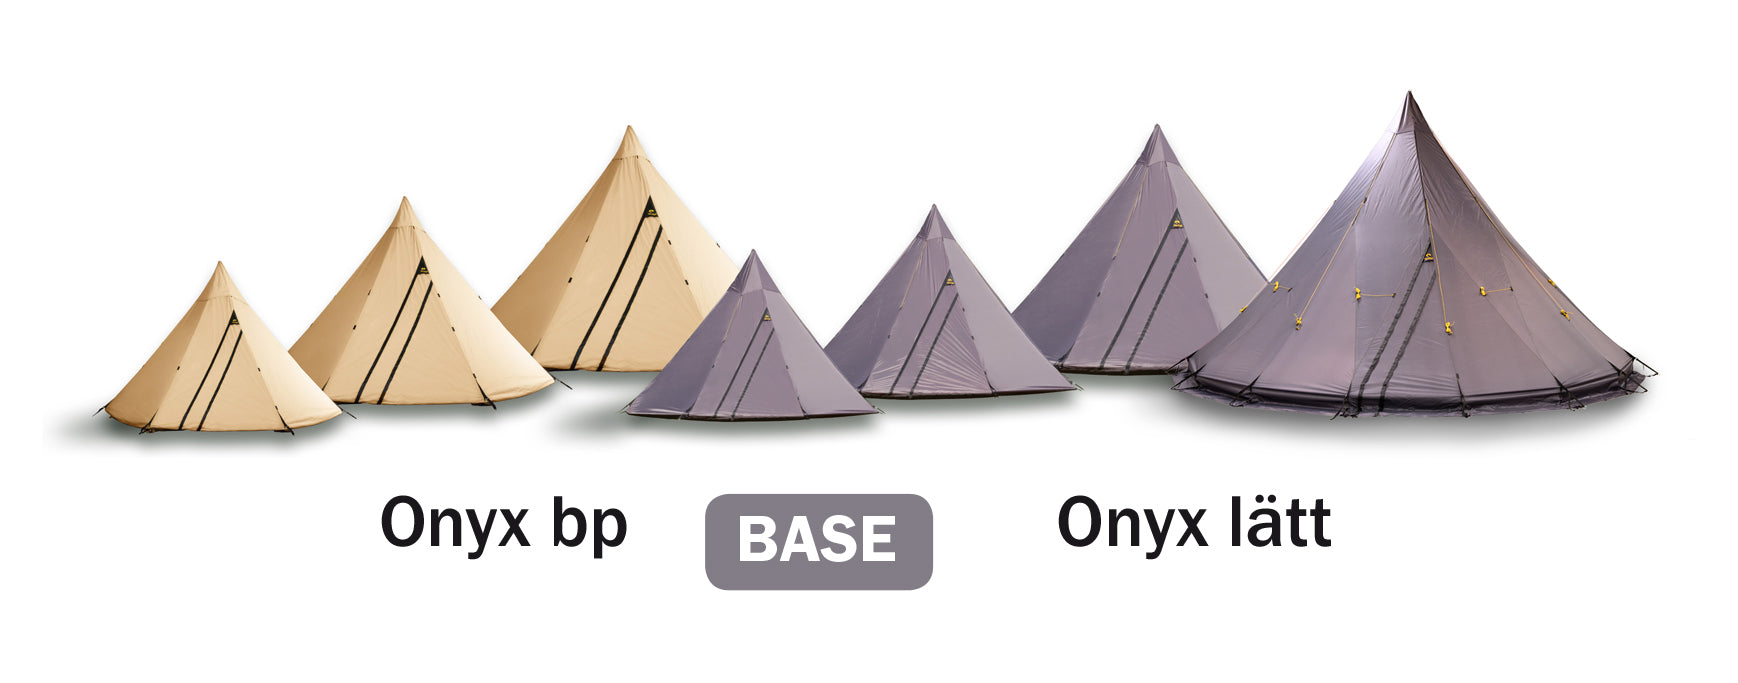 Onyx lavvo telt